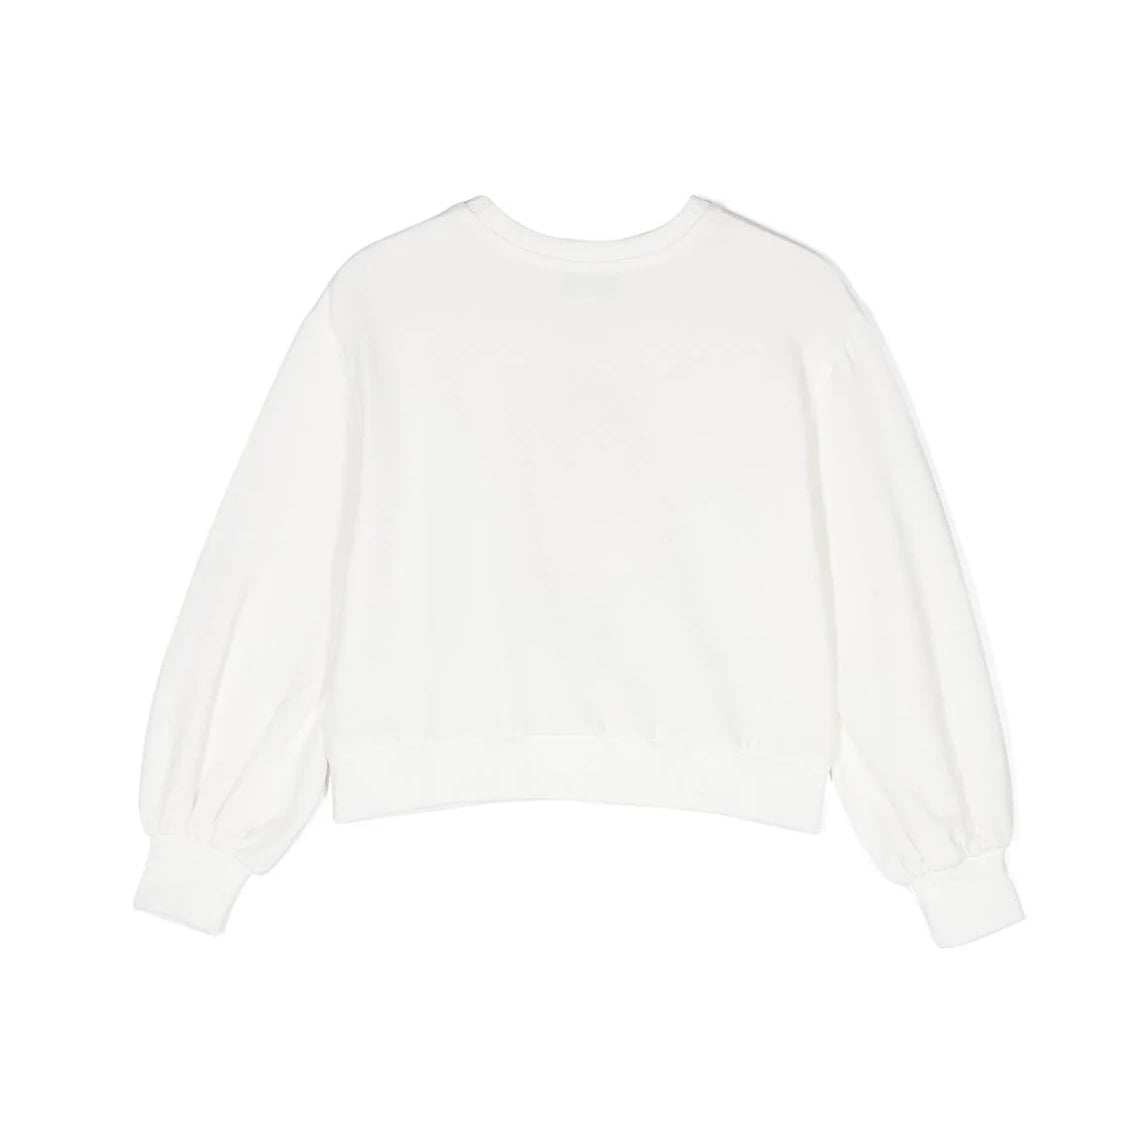 Girls White Bear Cotton Sweatshirt